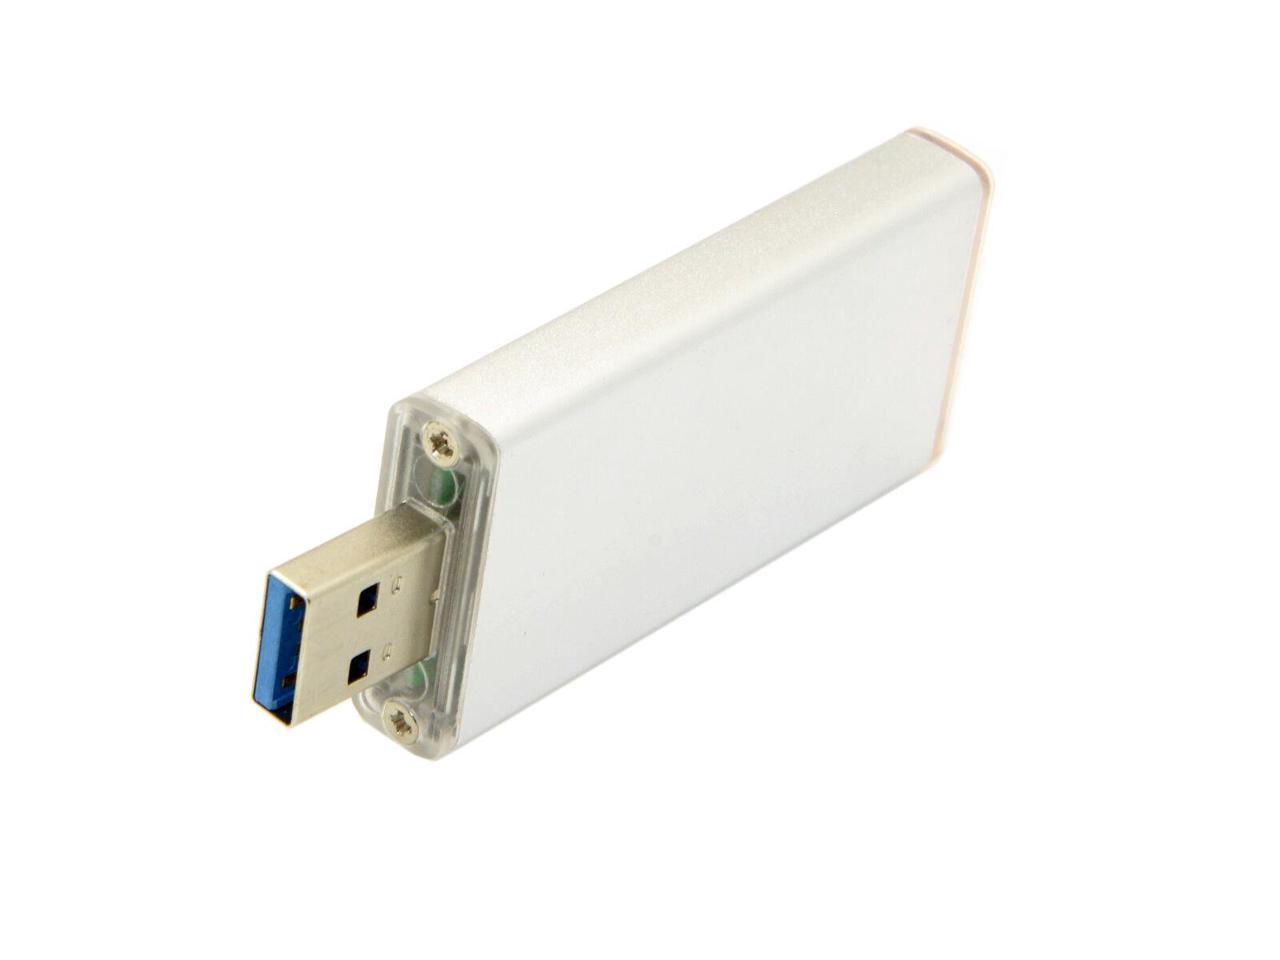 USB 3.0 to 42mm NGFF M2 B/M-key SSD External PCBA Conveter Adapter Silver Case 